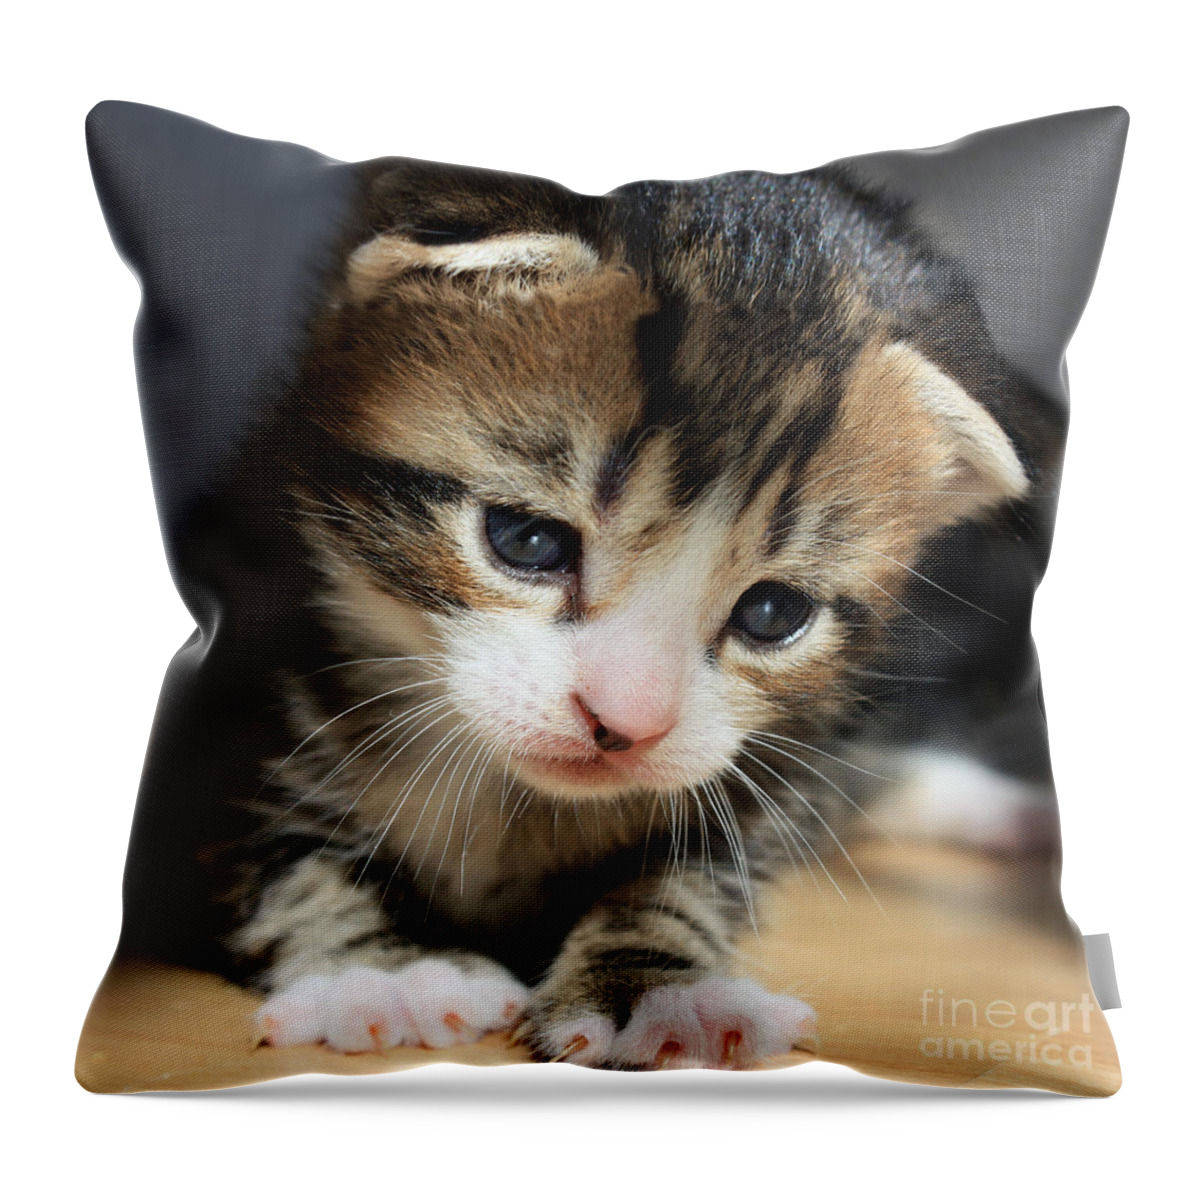 Kitten Throw Pillow featuring the photograph Daydreamer Kitten by Terri Waters